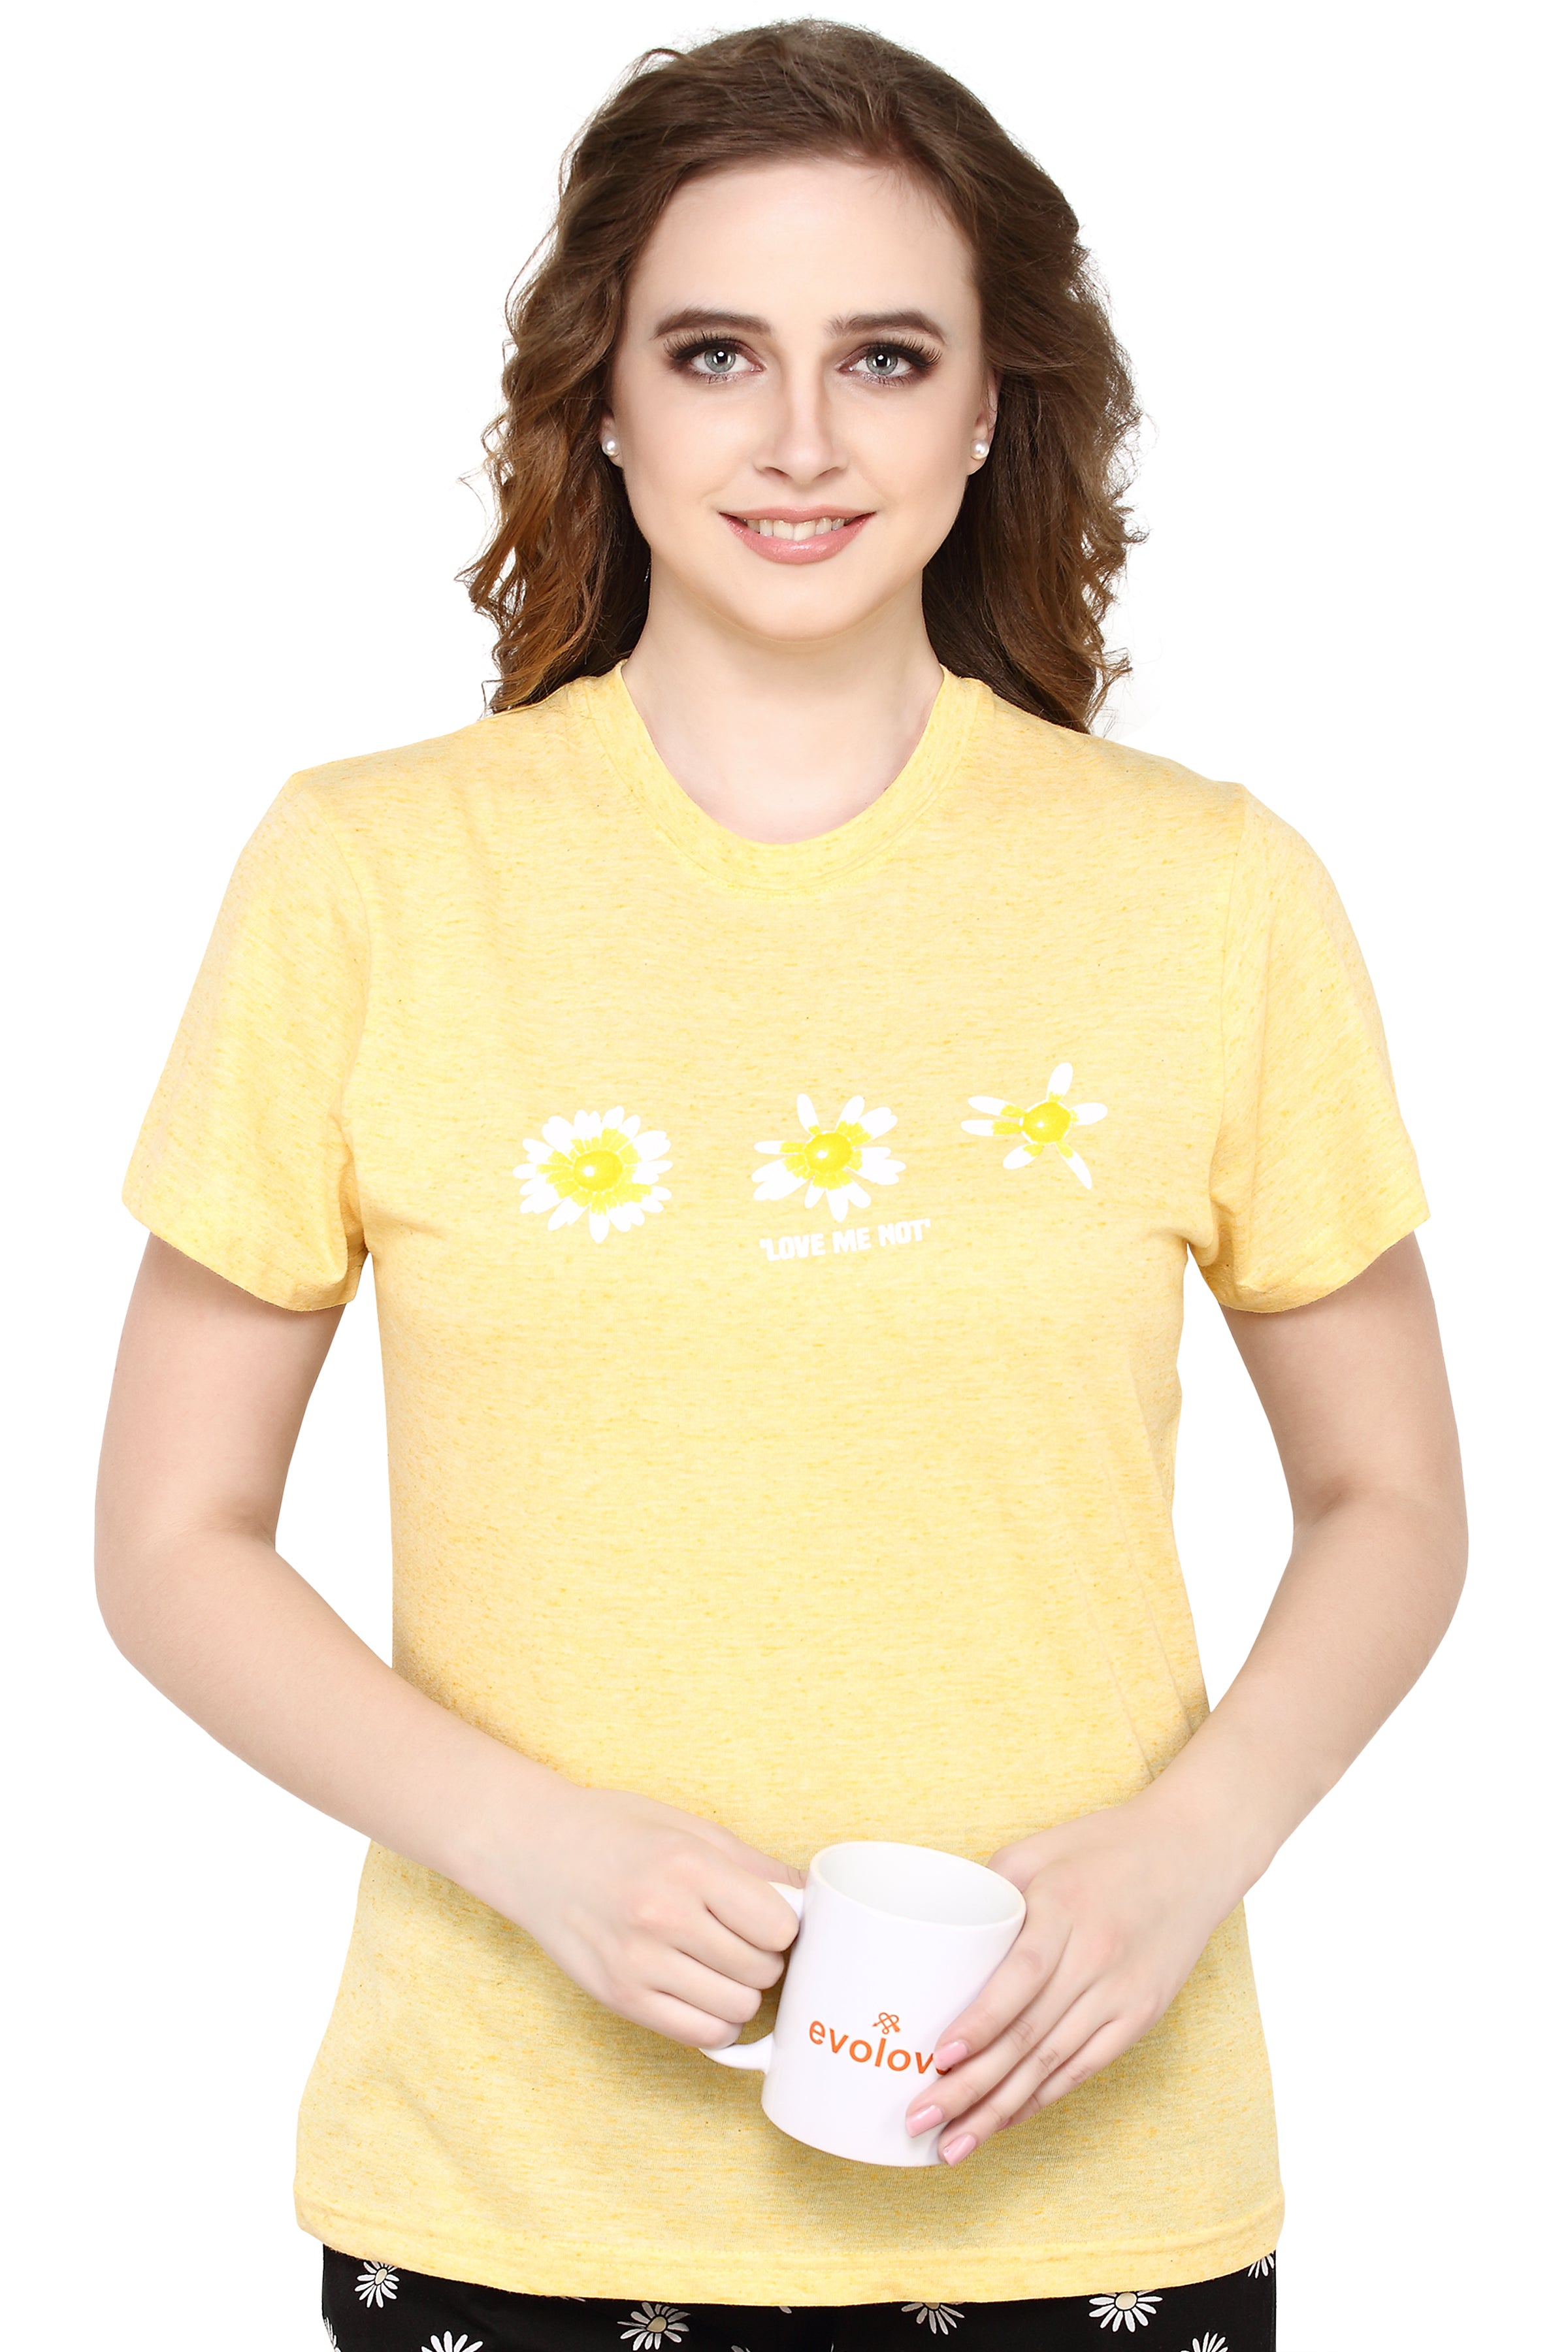 evolove Buttercup Round Neck Flower print Women's (Shorts set), (Yellow & Black), S Get free eyemask inside of any design